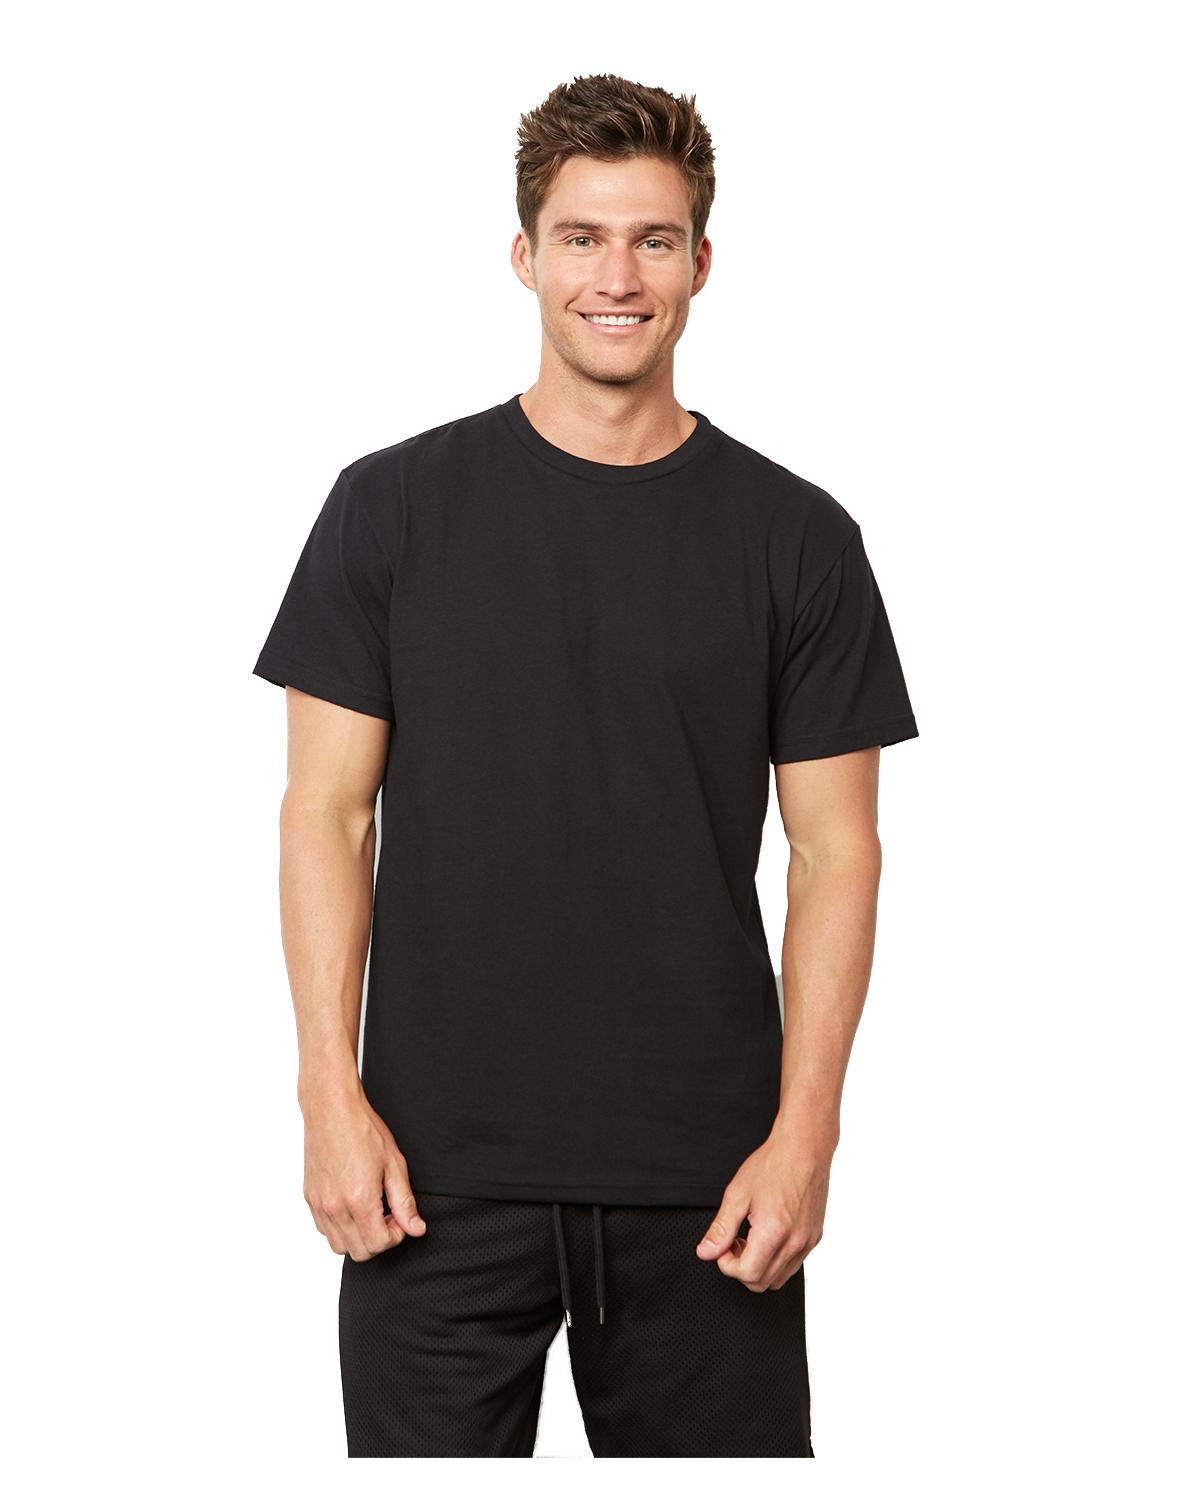 12 BLANK BLACK GILDAN Long Sleeve T-Shirts Heavyweight S M L XL 2XL 3XL BULK LOT